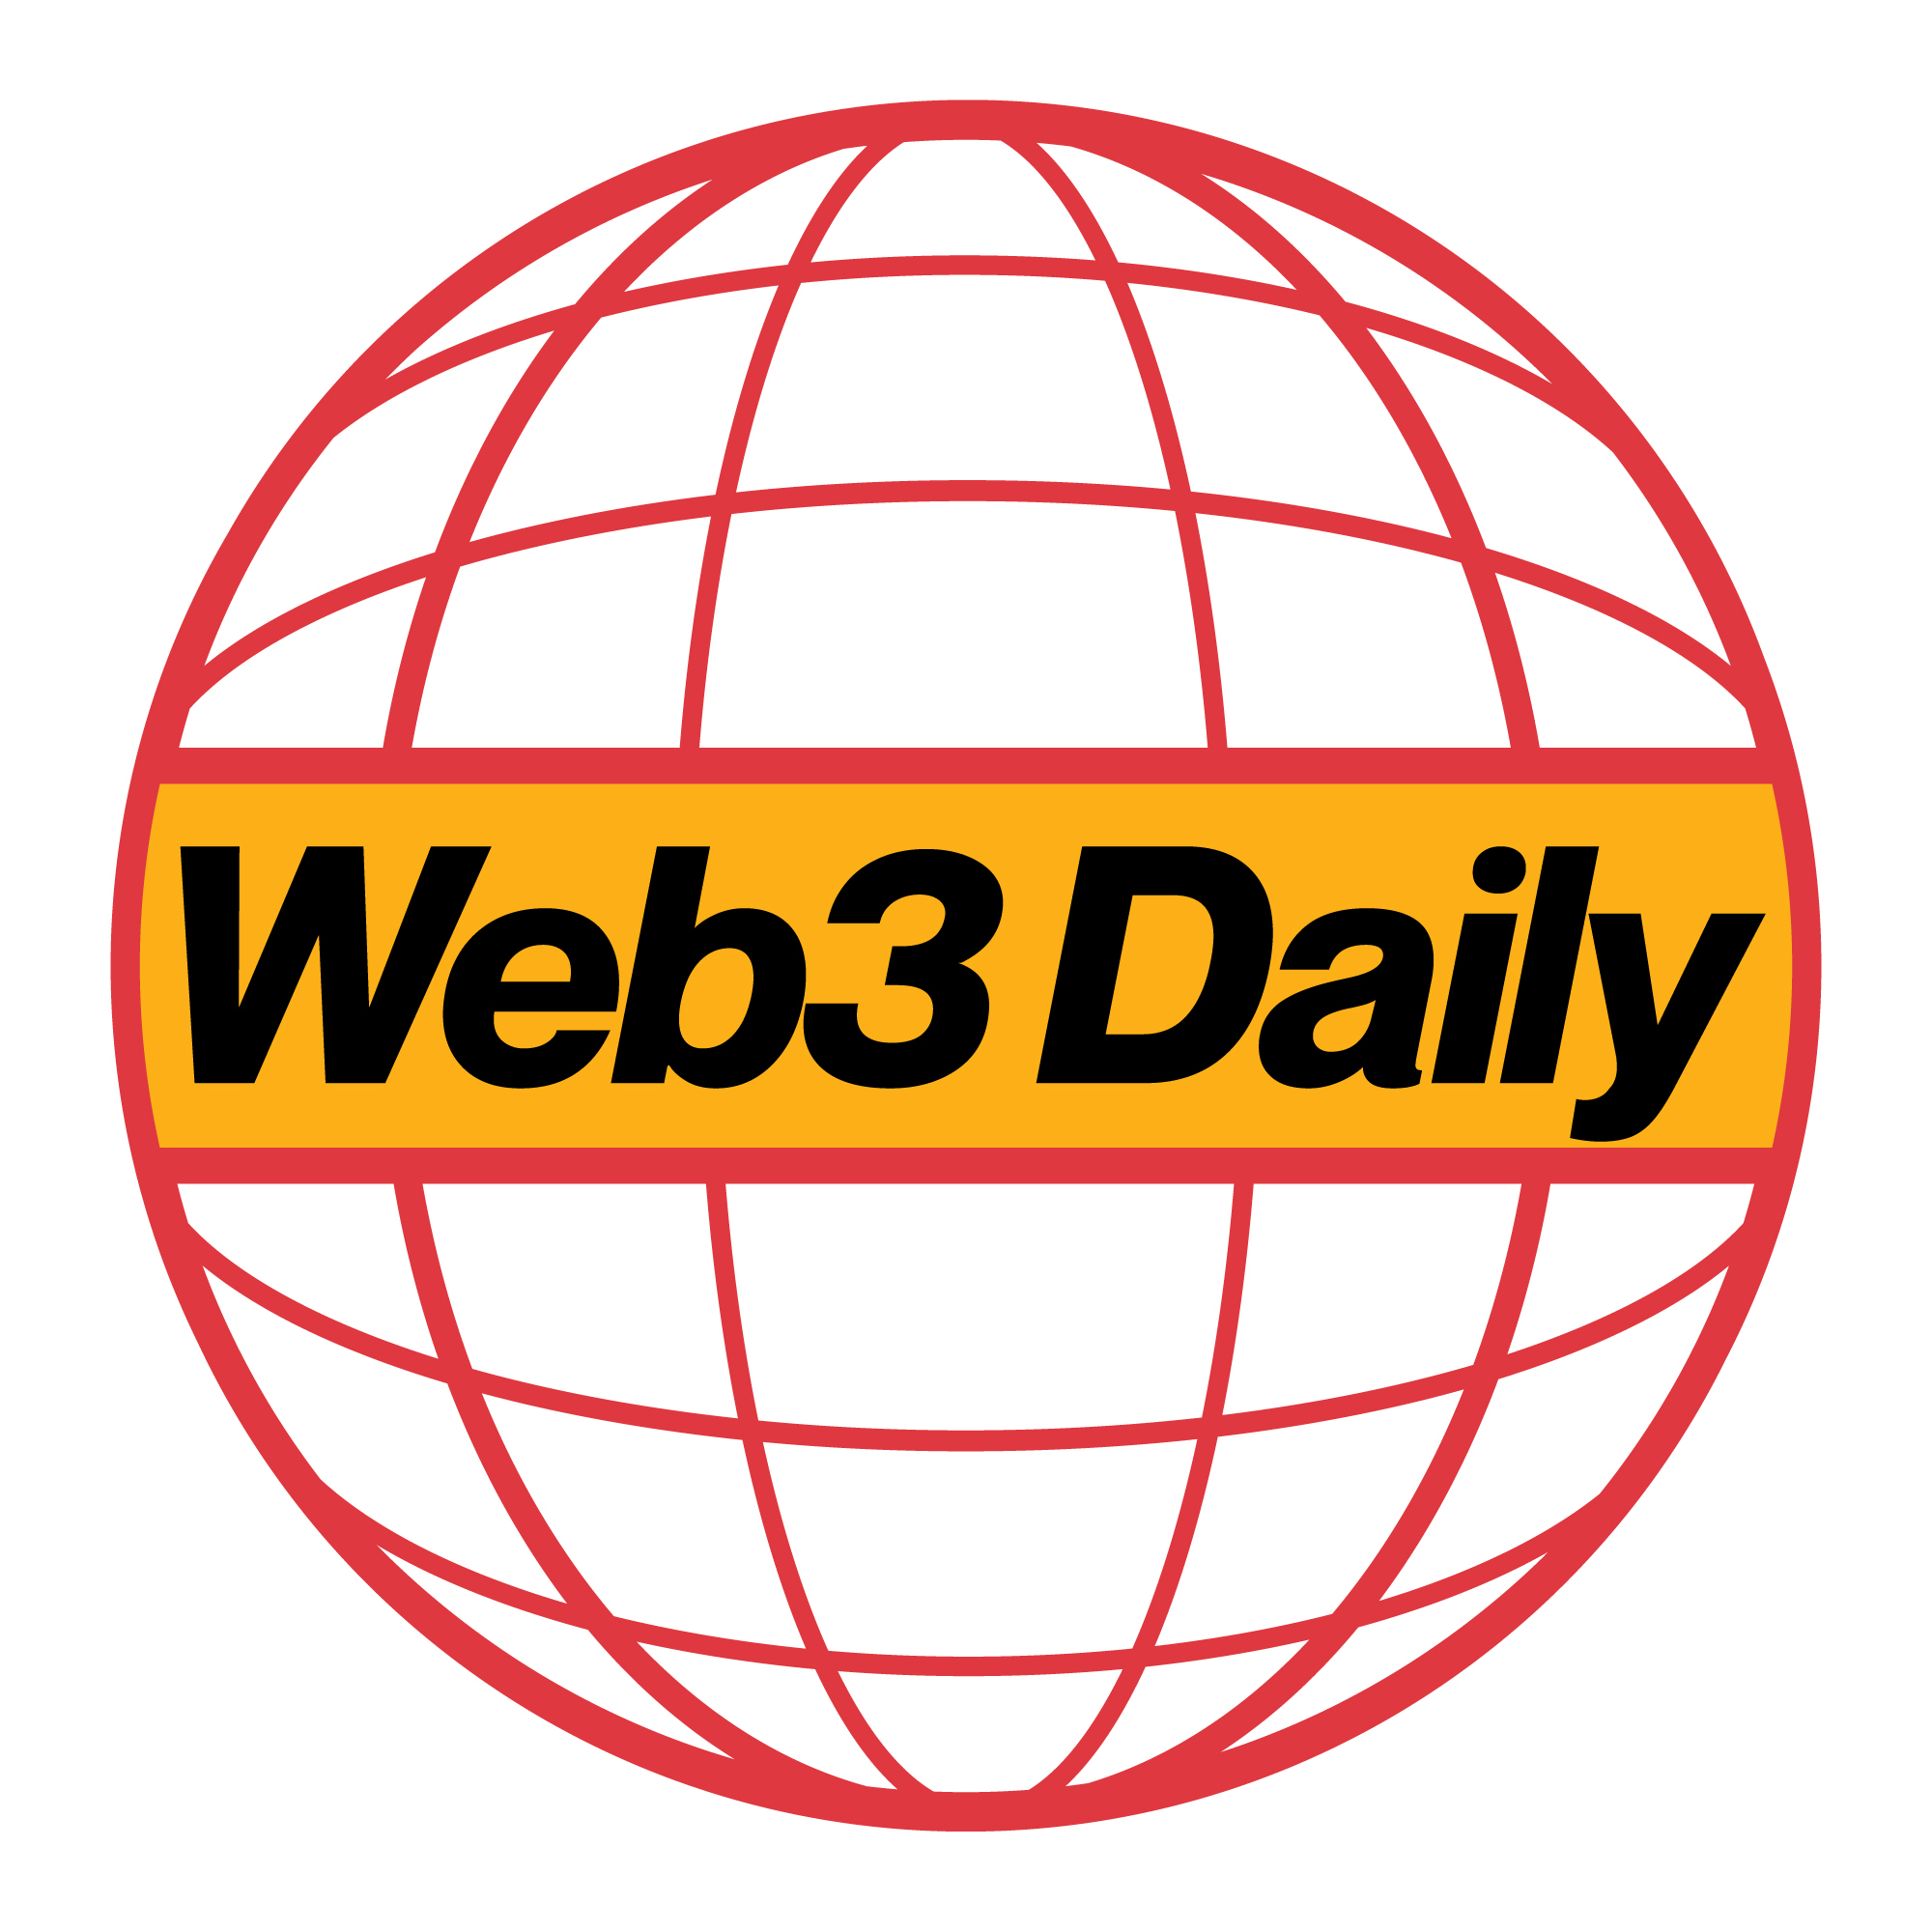 Web3 Daily